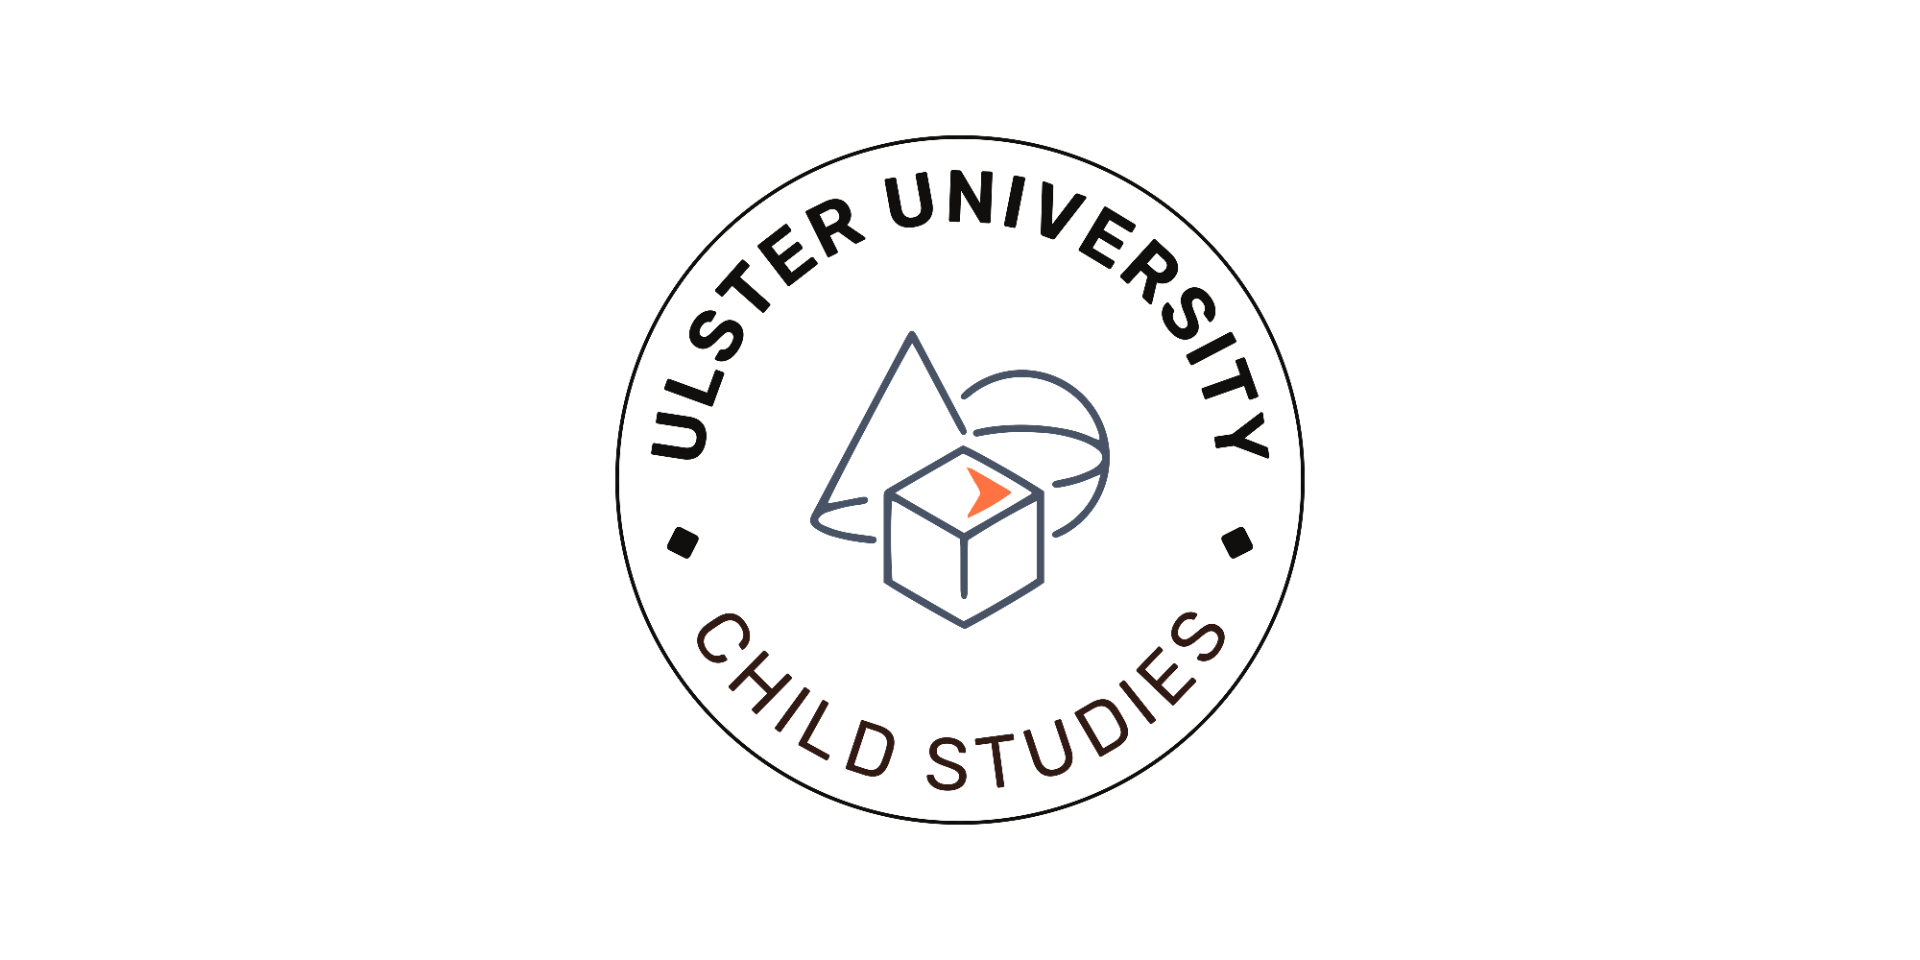 Ulster University Child Studies